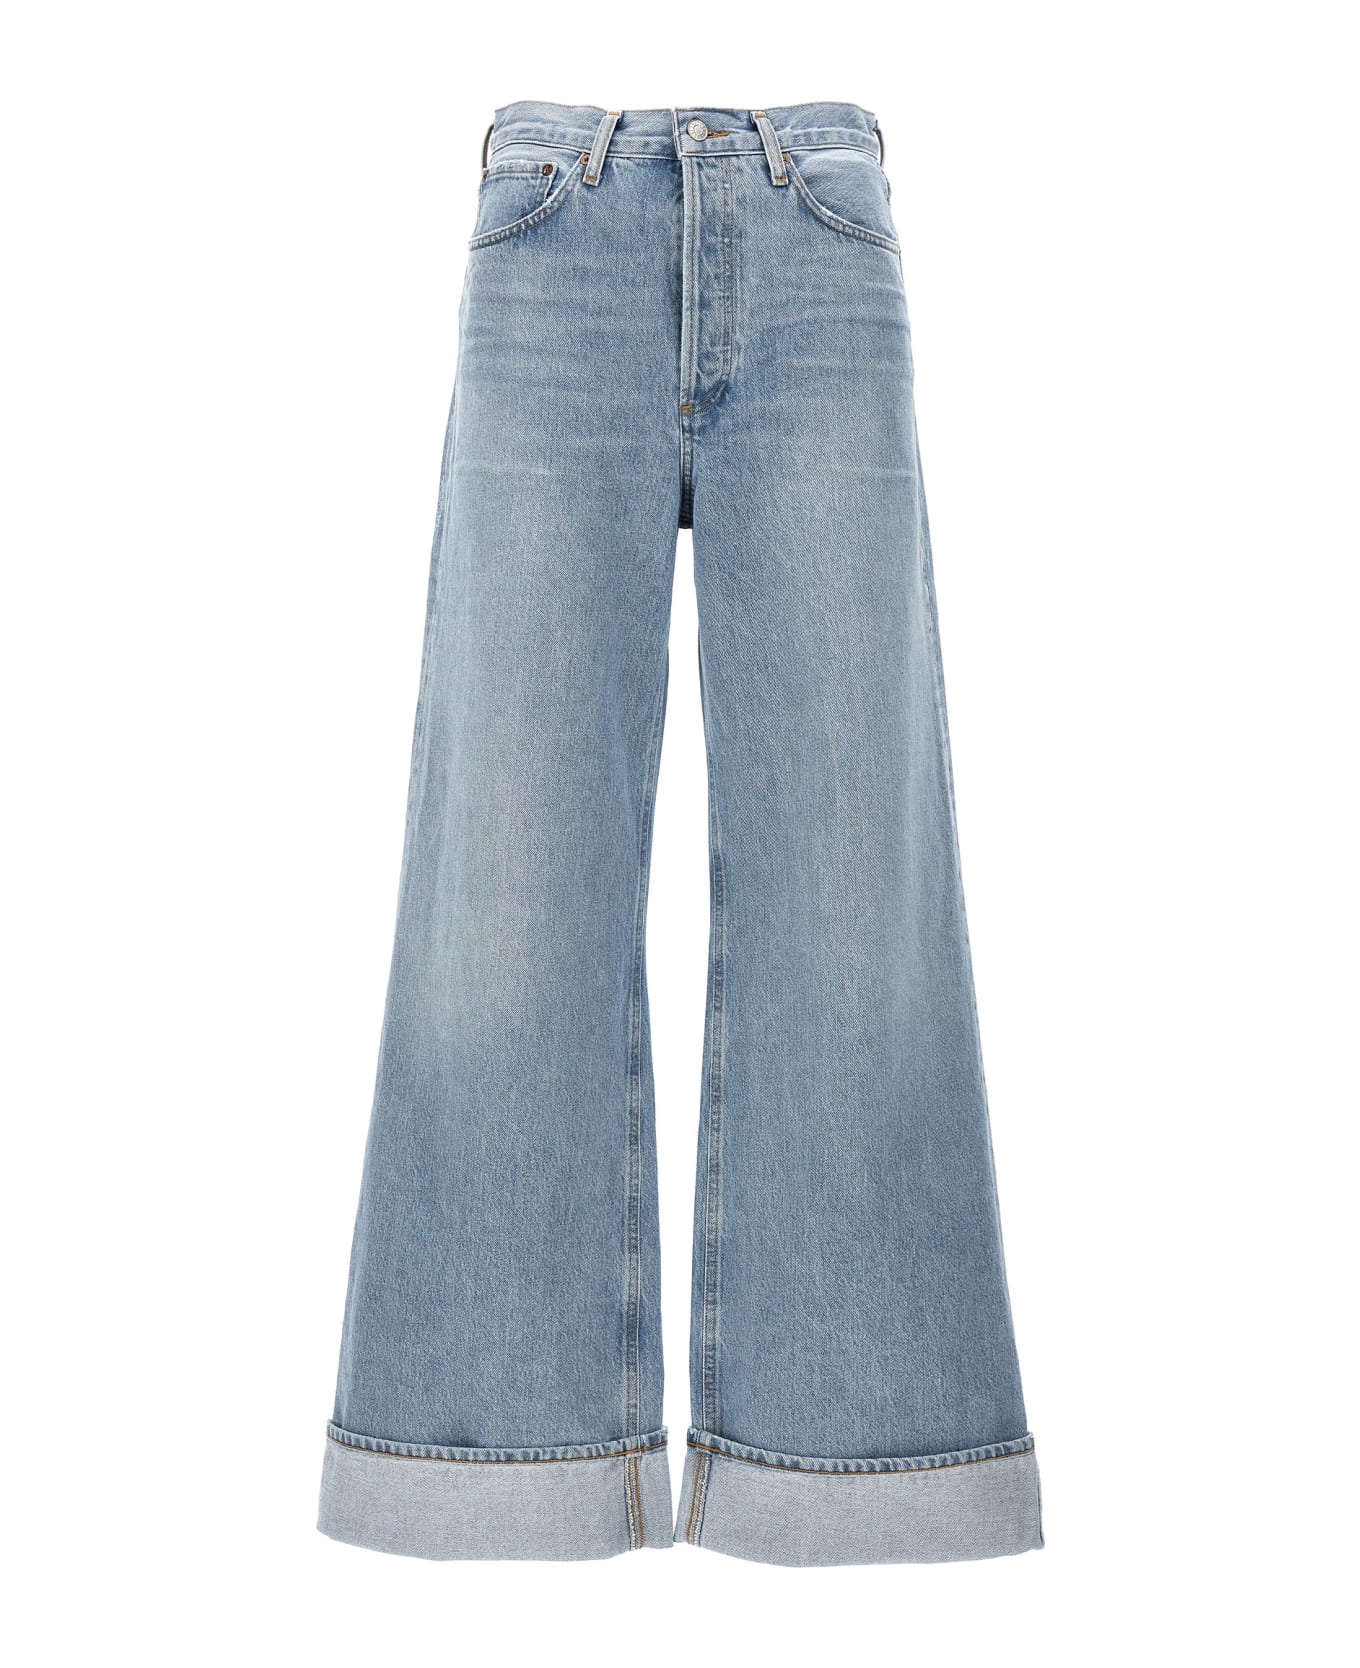 AGOLDE 'dame' Jeans - Shwdn Showdown